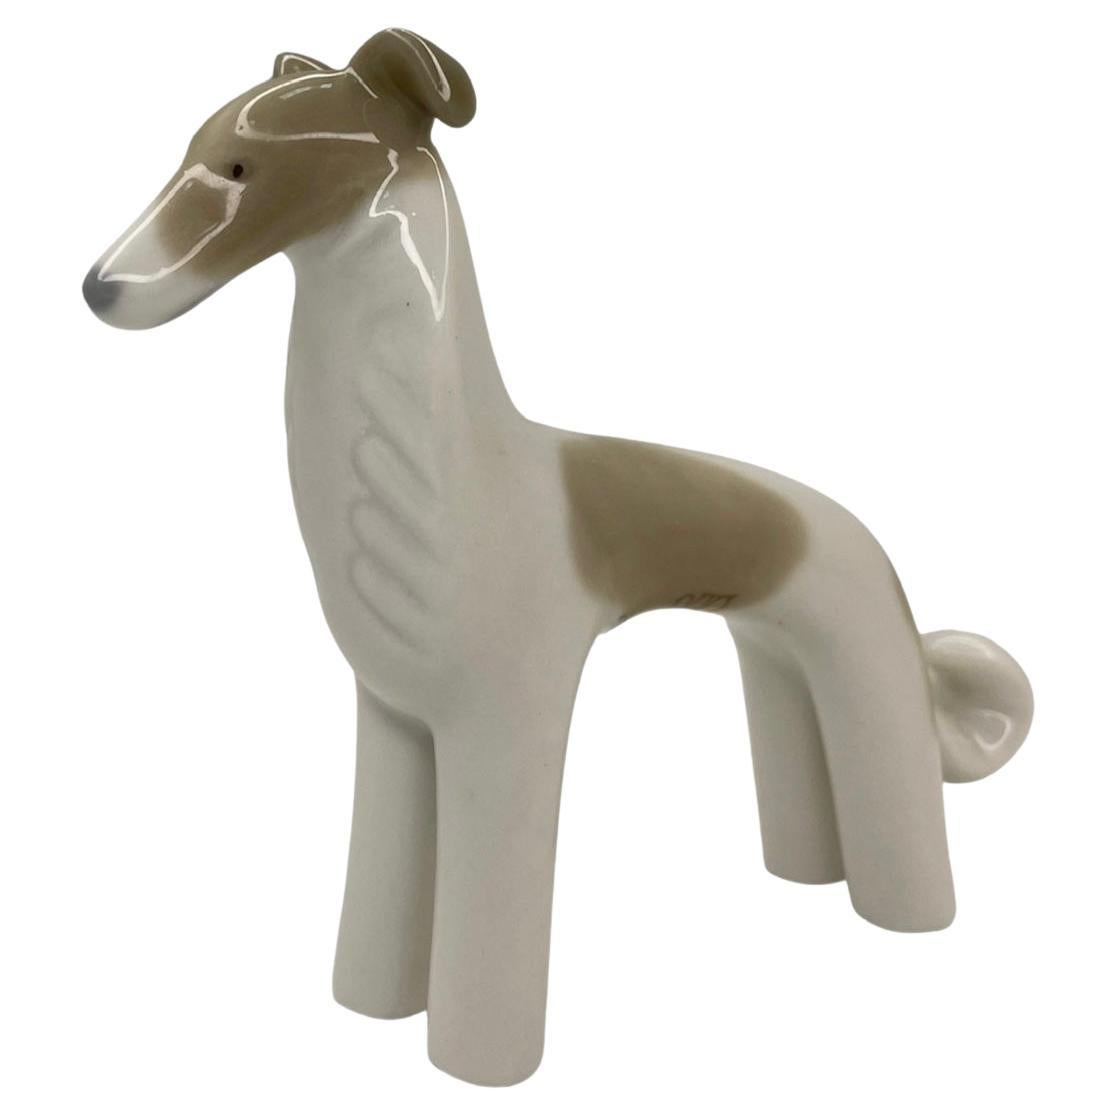 Lladro-Porzellan-Minifigur eines Hundes